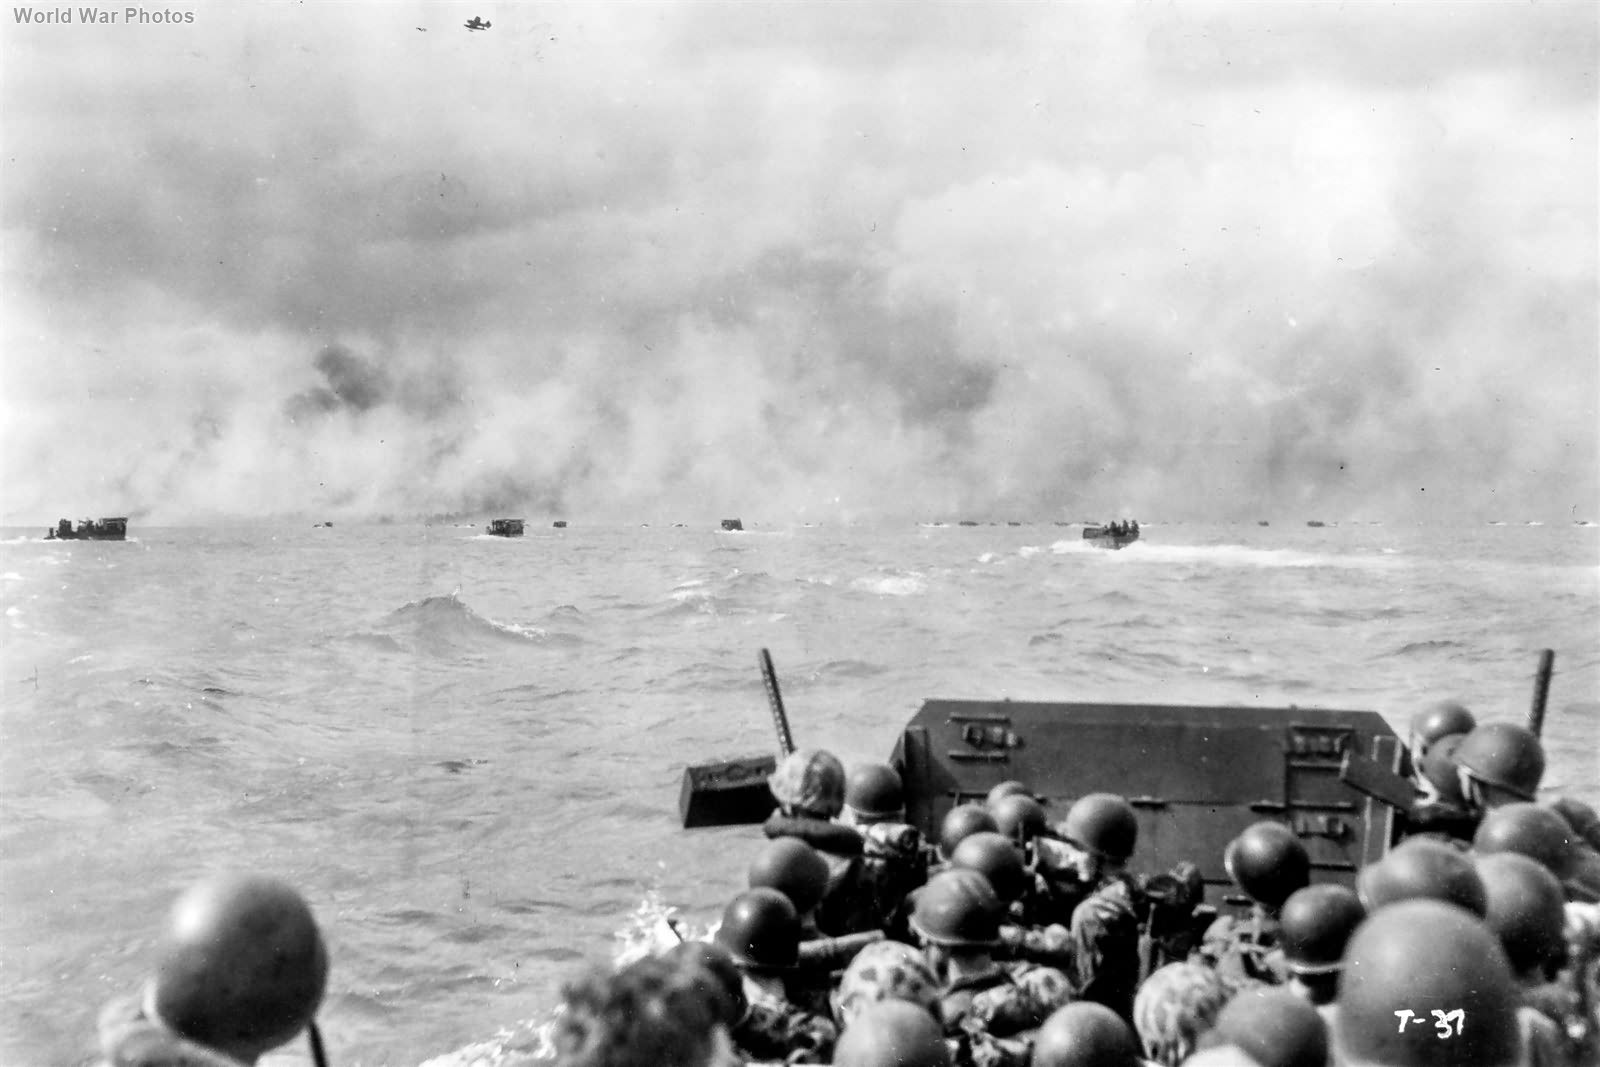 2nd Marine Division LCVP wave bound for Tarawa